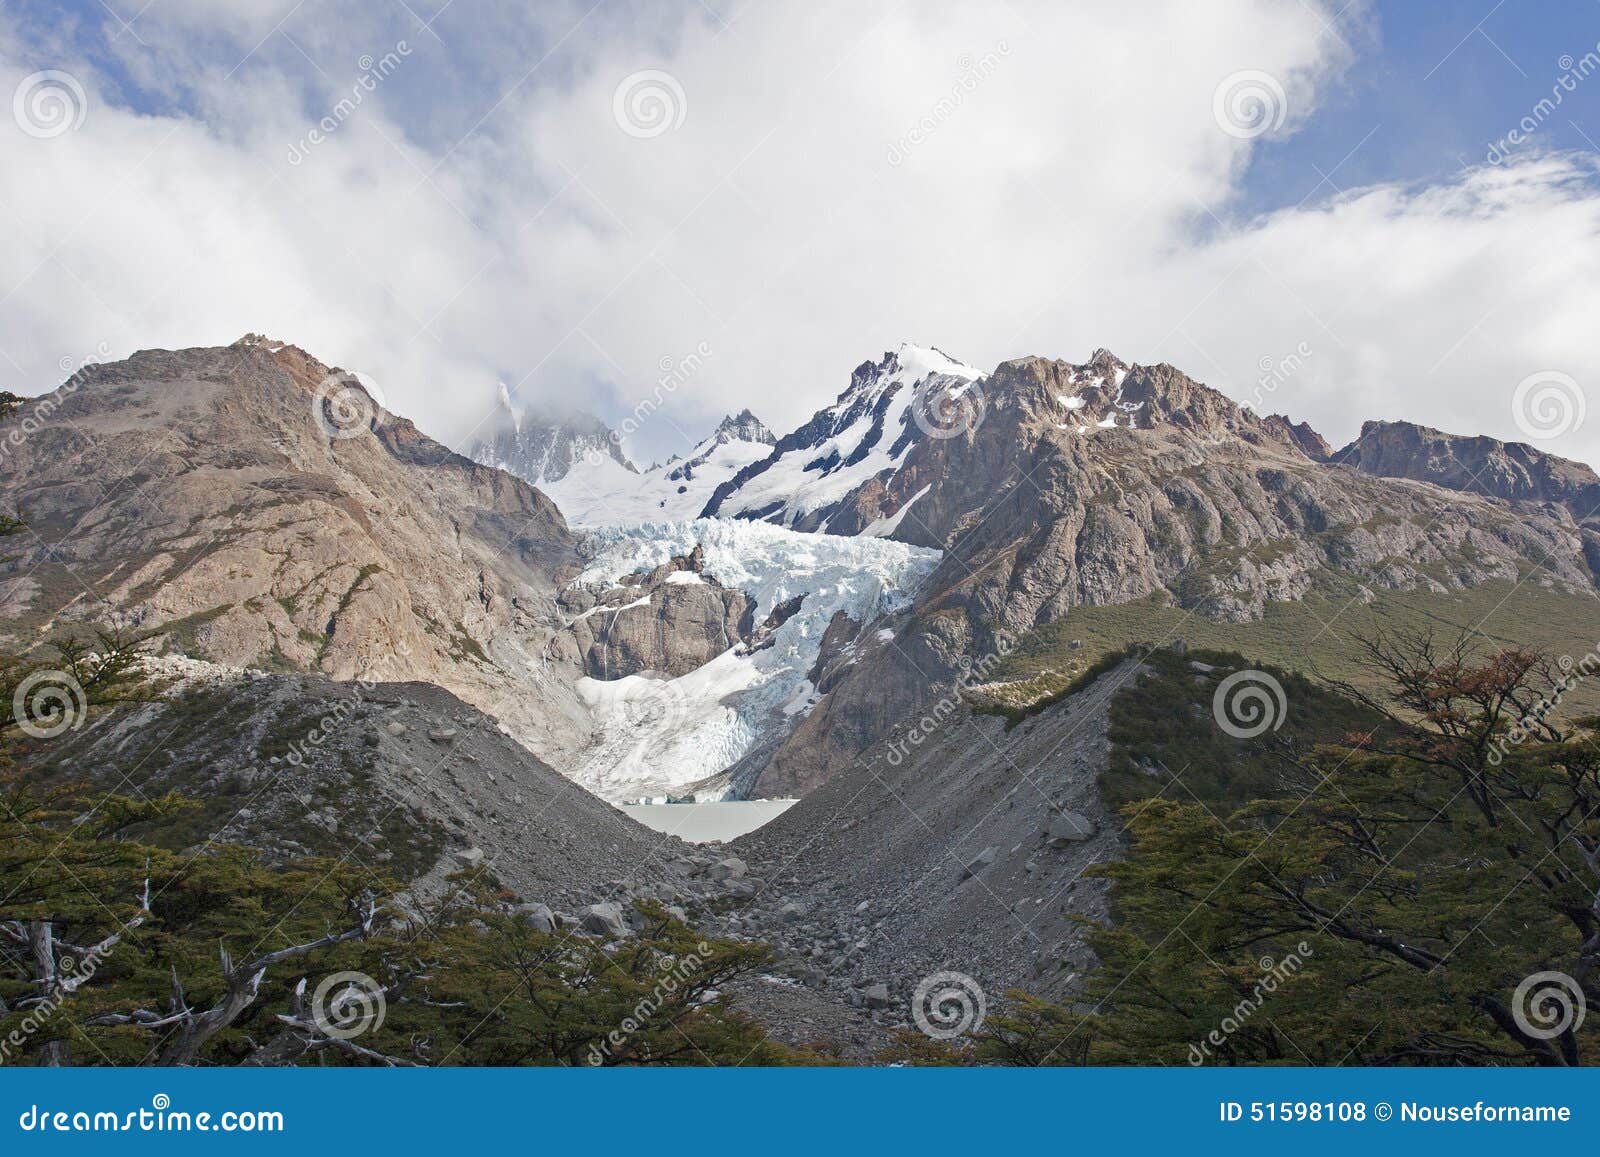 near glaciar piedras blancas, patagonia, argentina